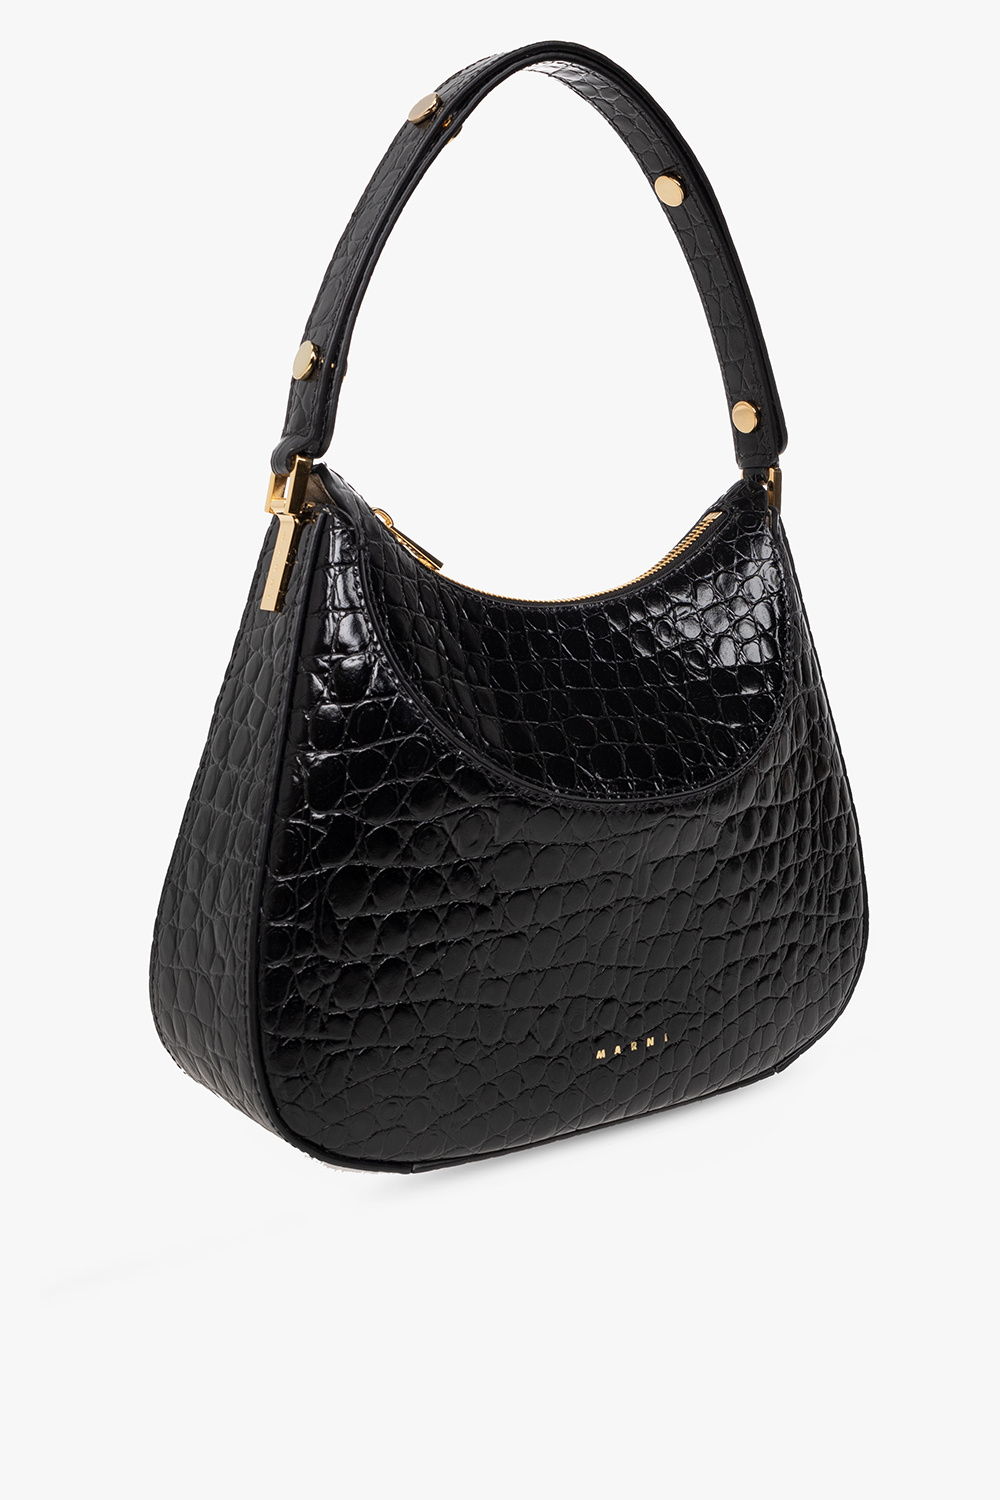 Marni Juliette Small Leather Bag - Black